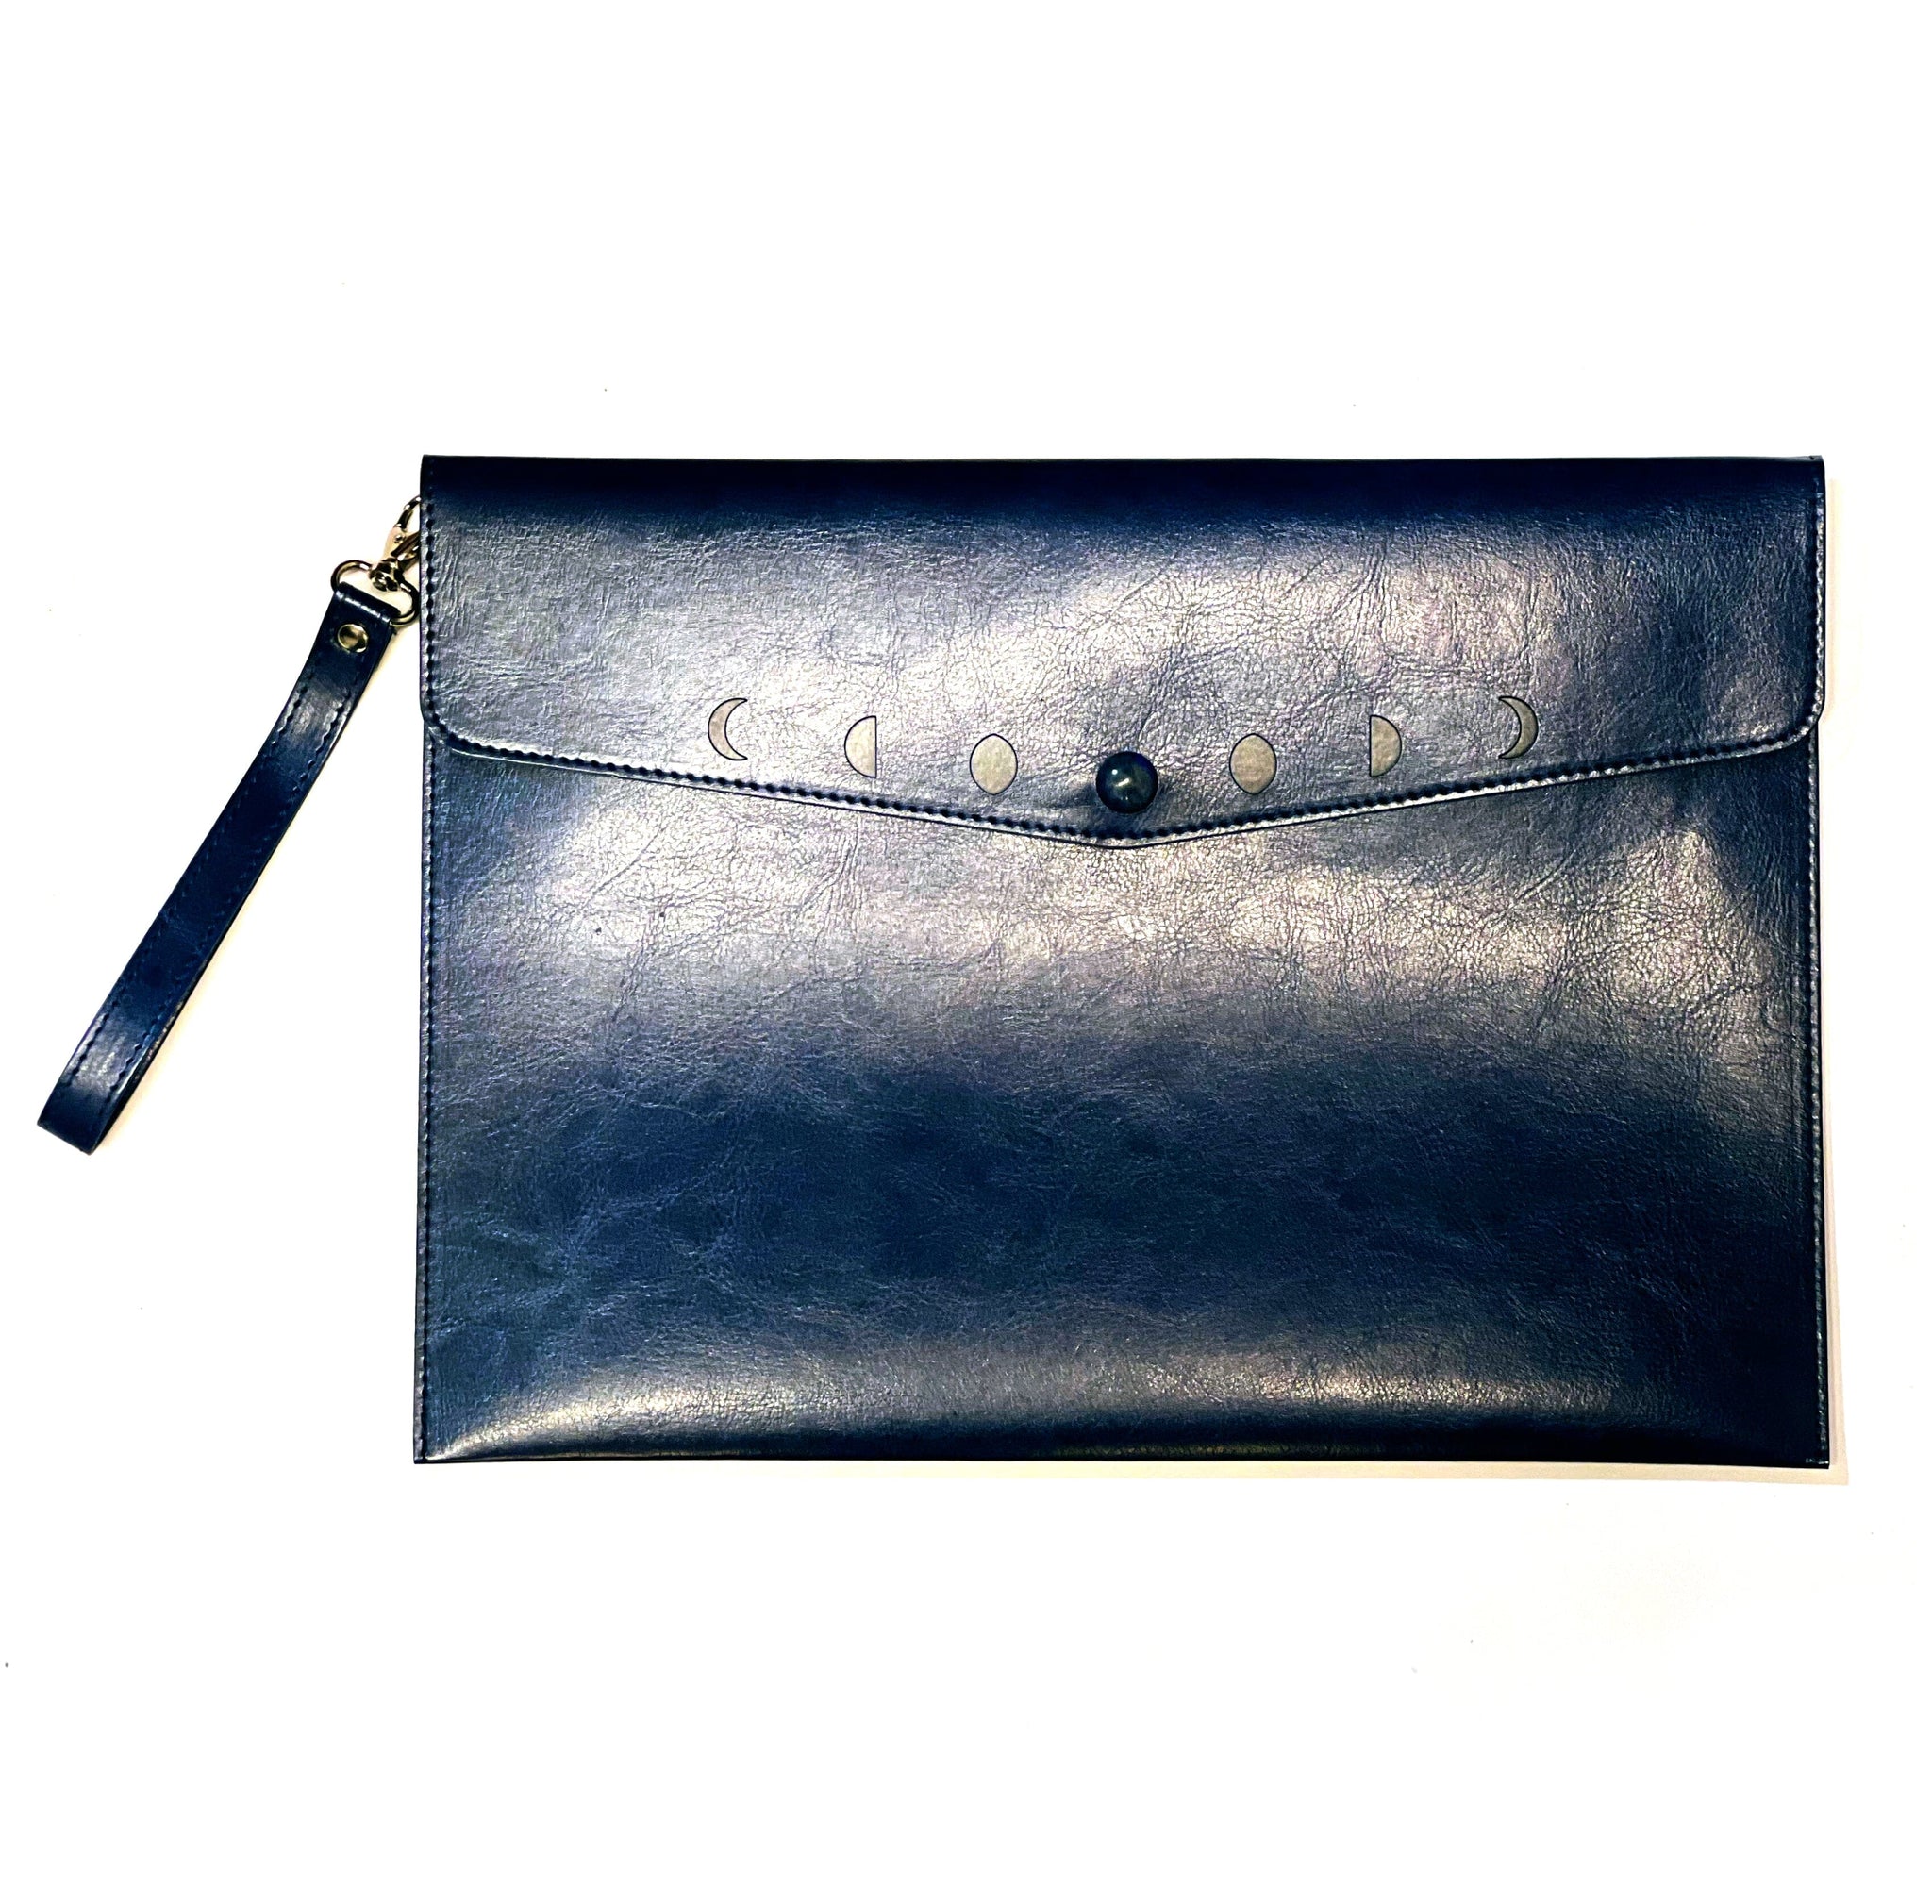 Prix De Dressage Navy blue leather clutch purse | eBay